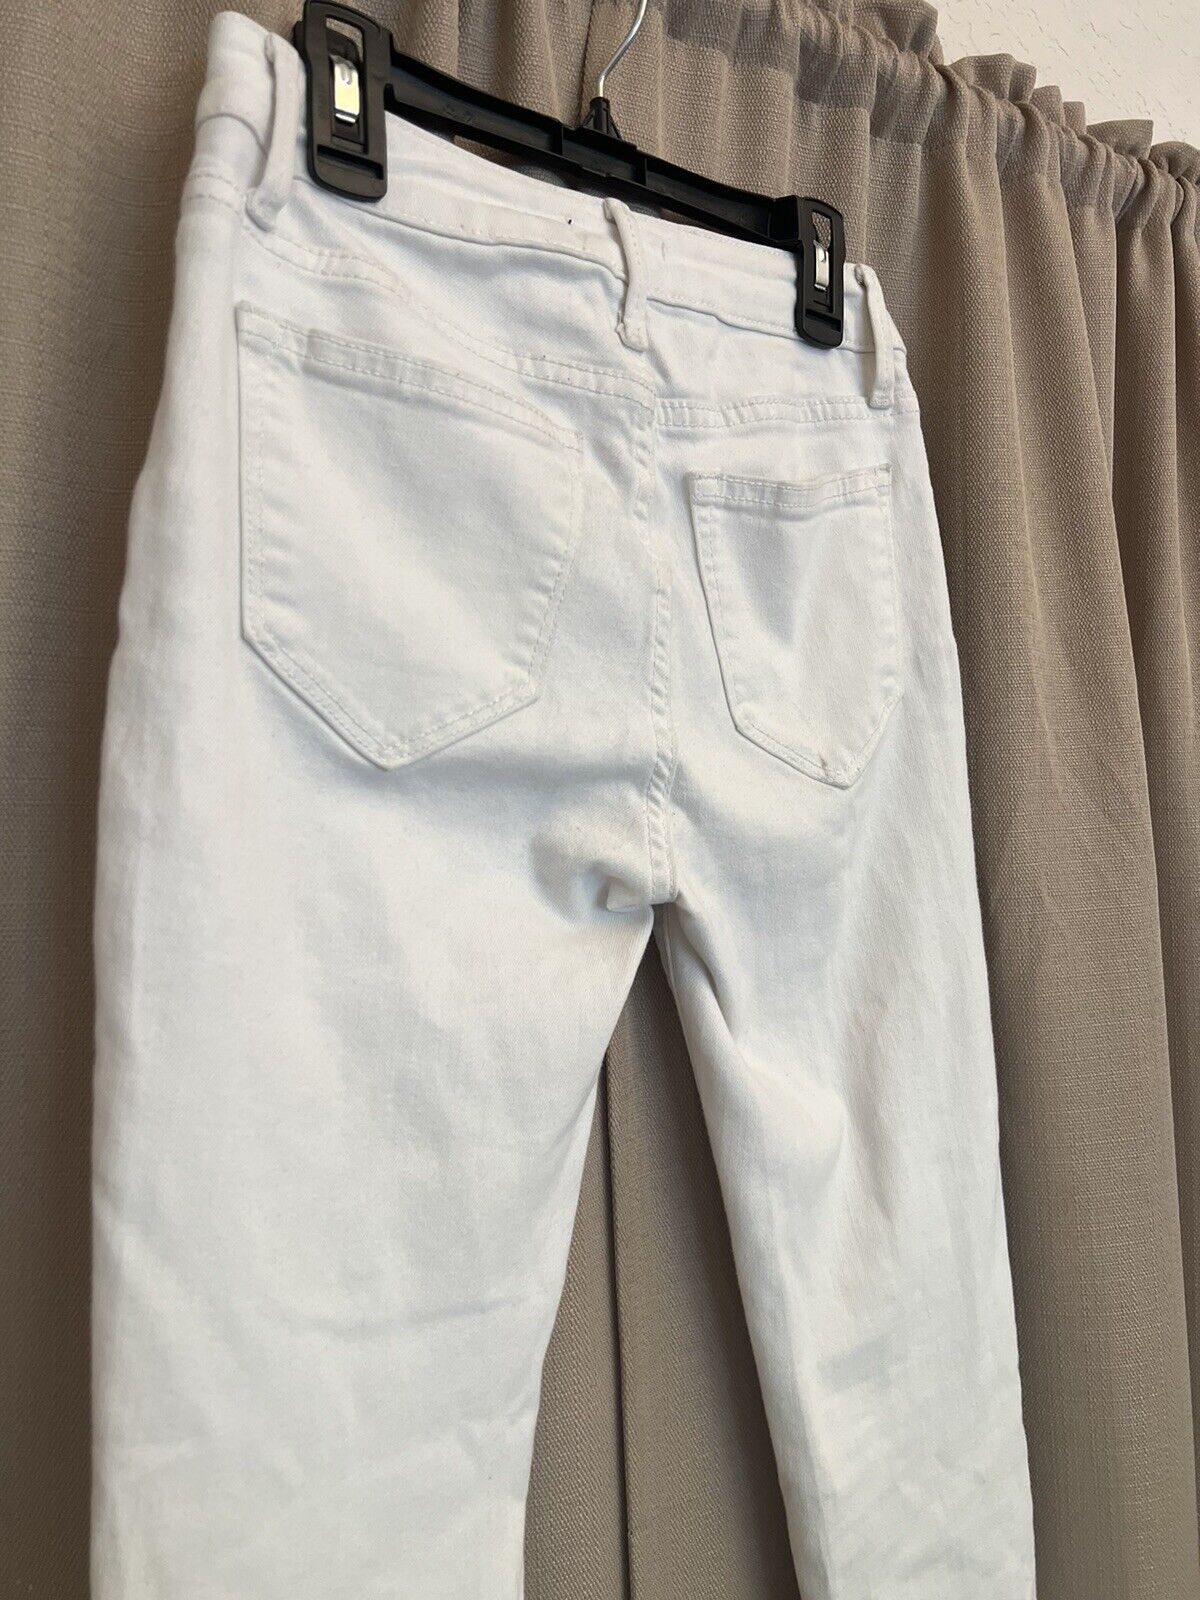 White Skinny Jeans Aqua 27(smaller)